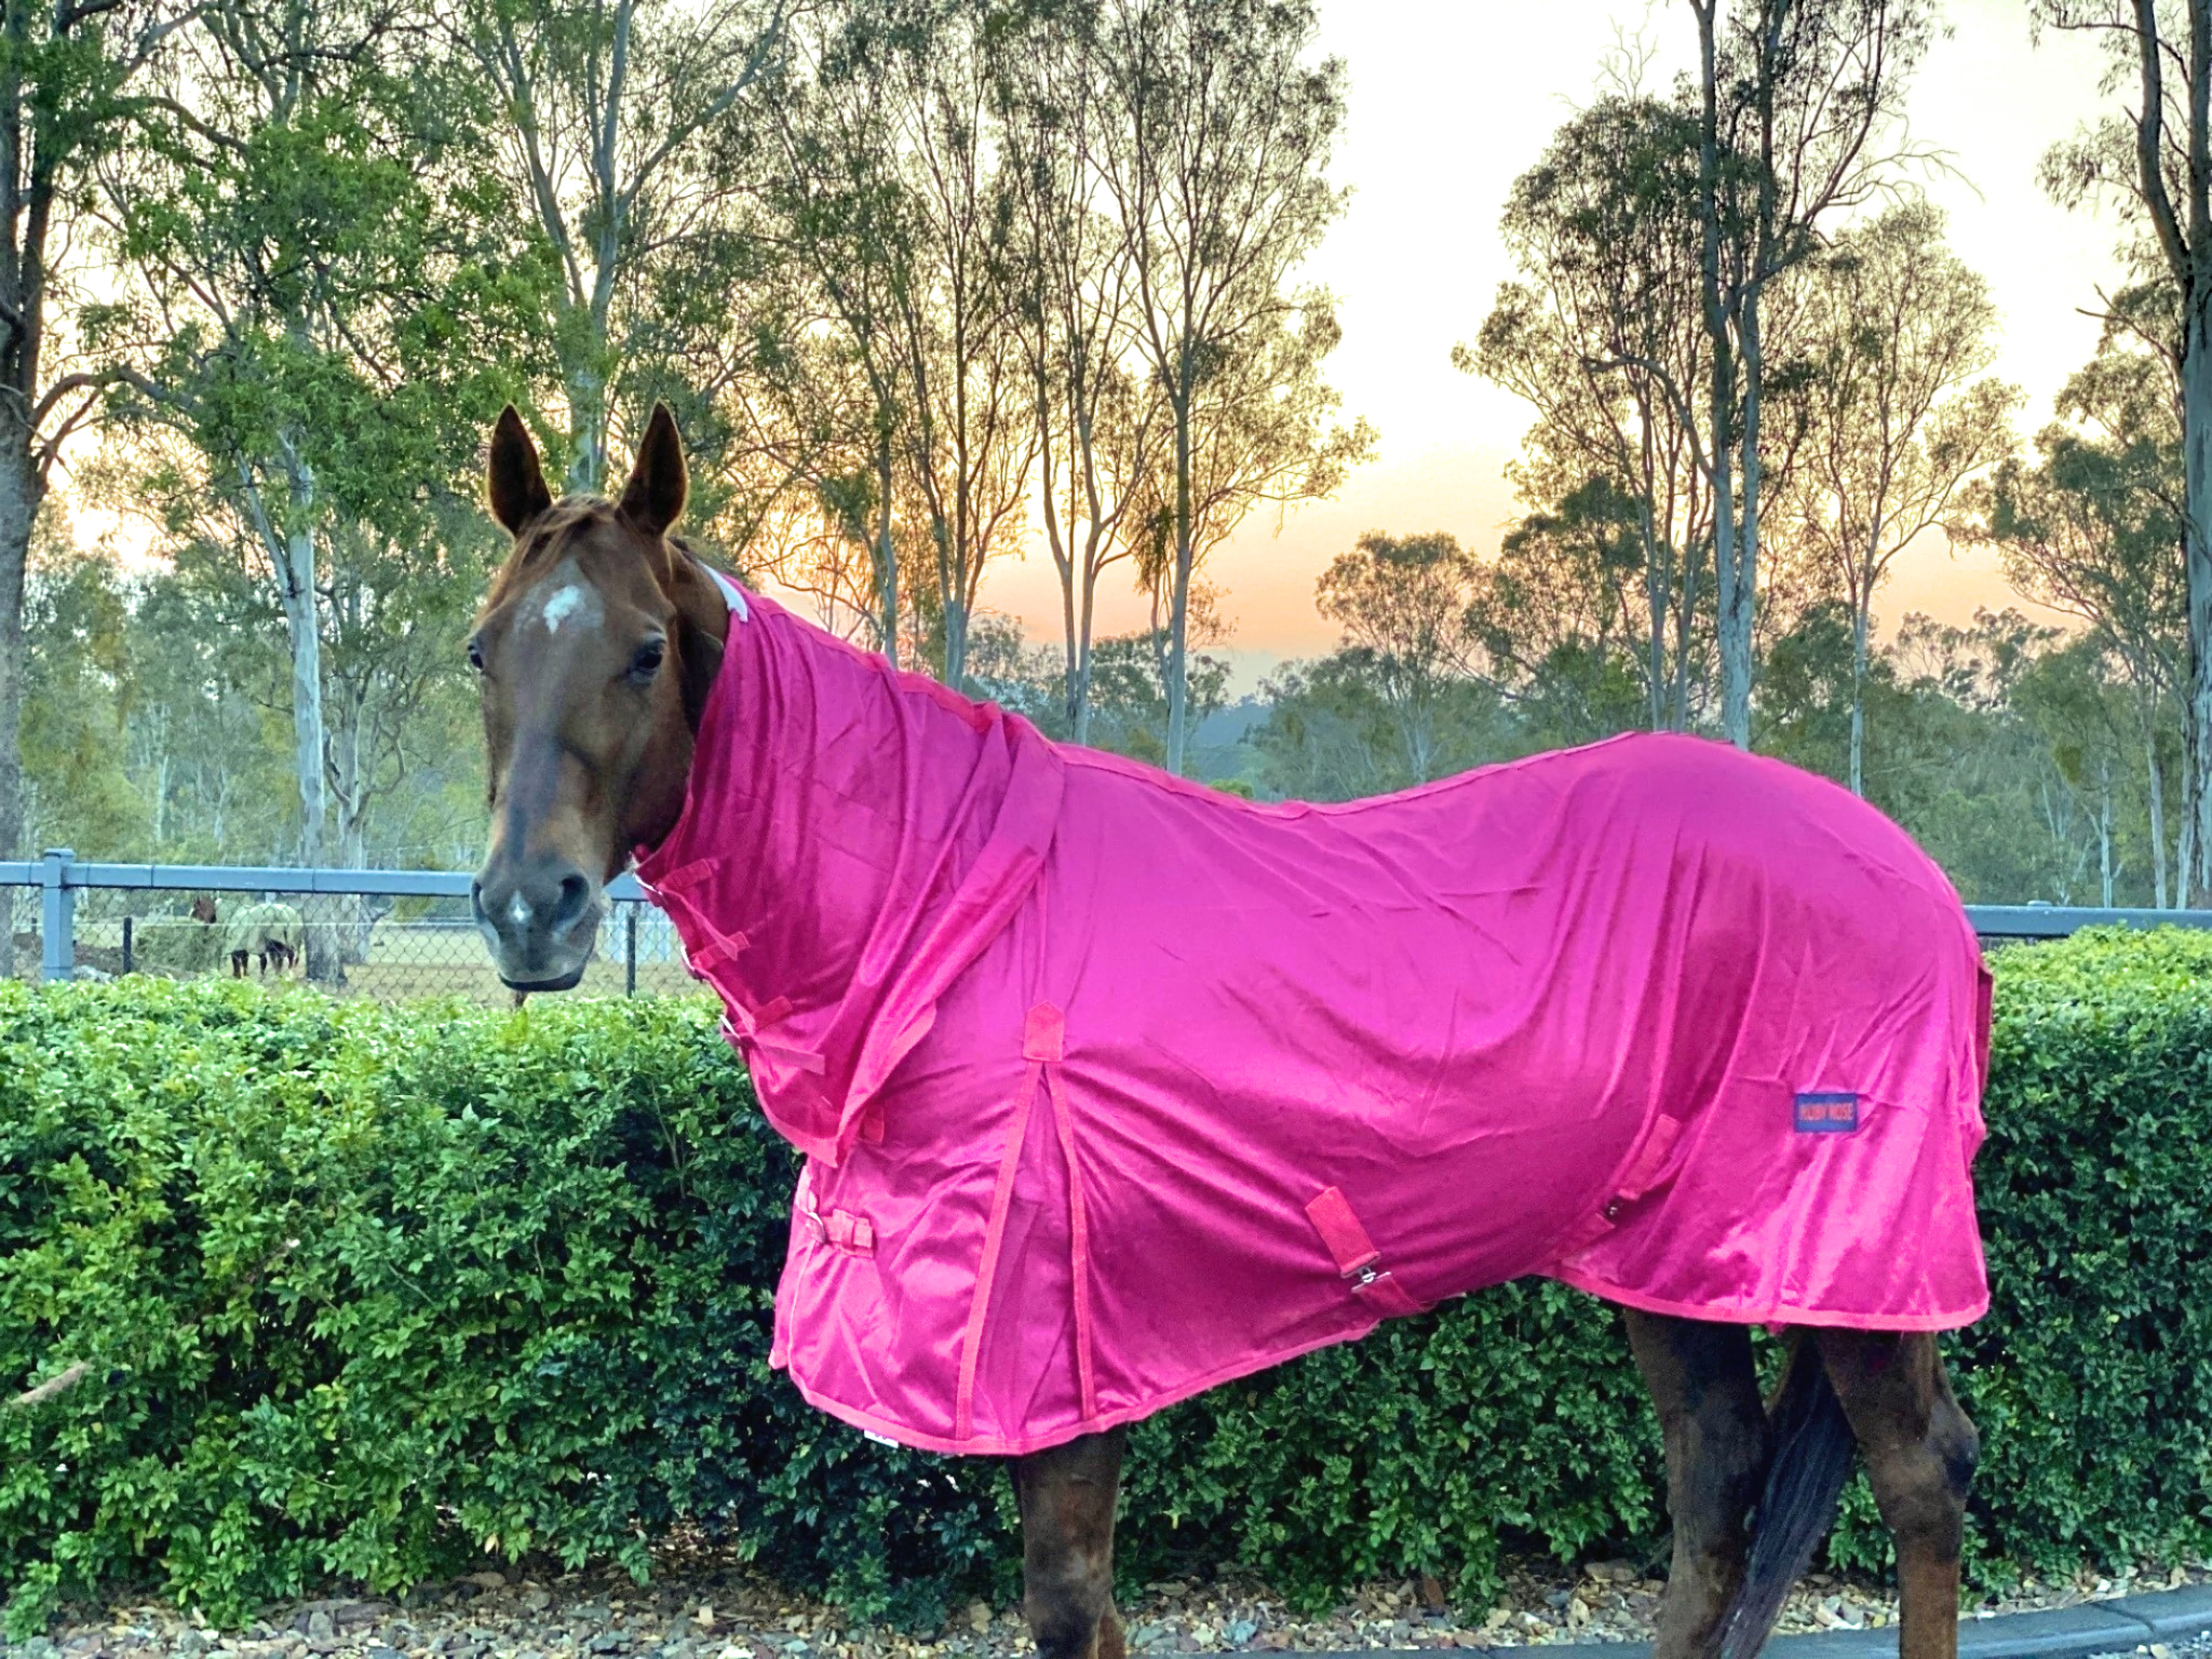 Horse Mesh Rug, Horse Blanket